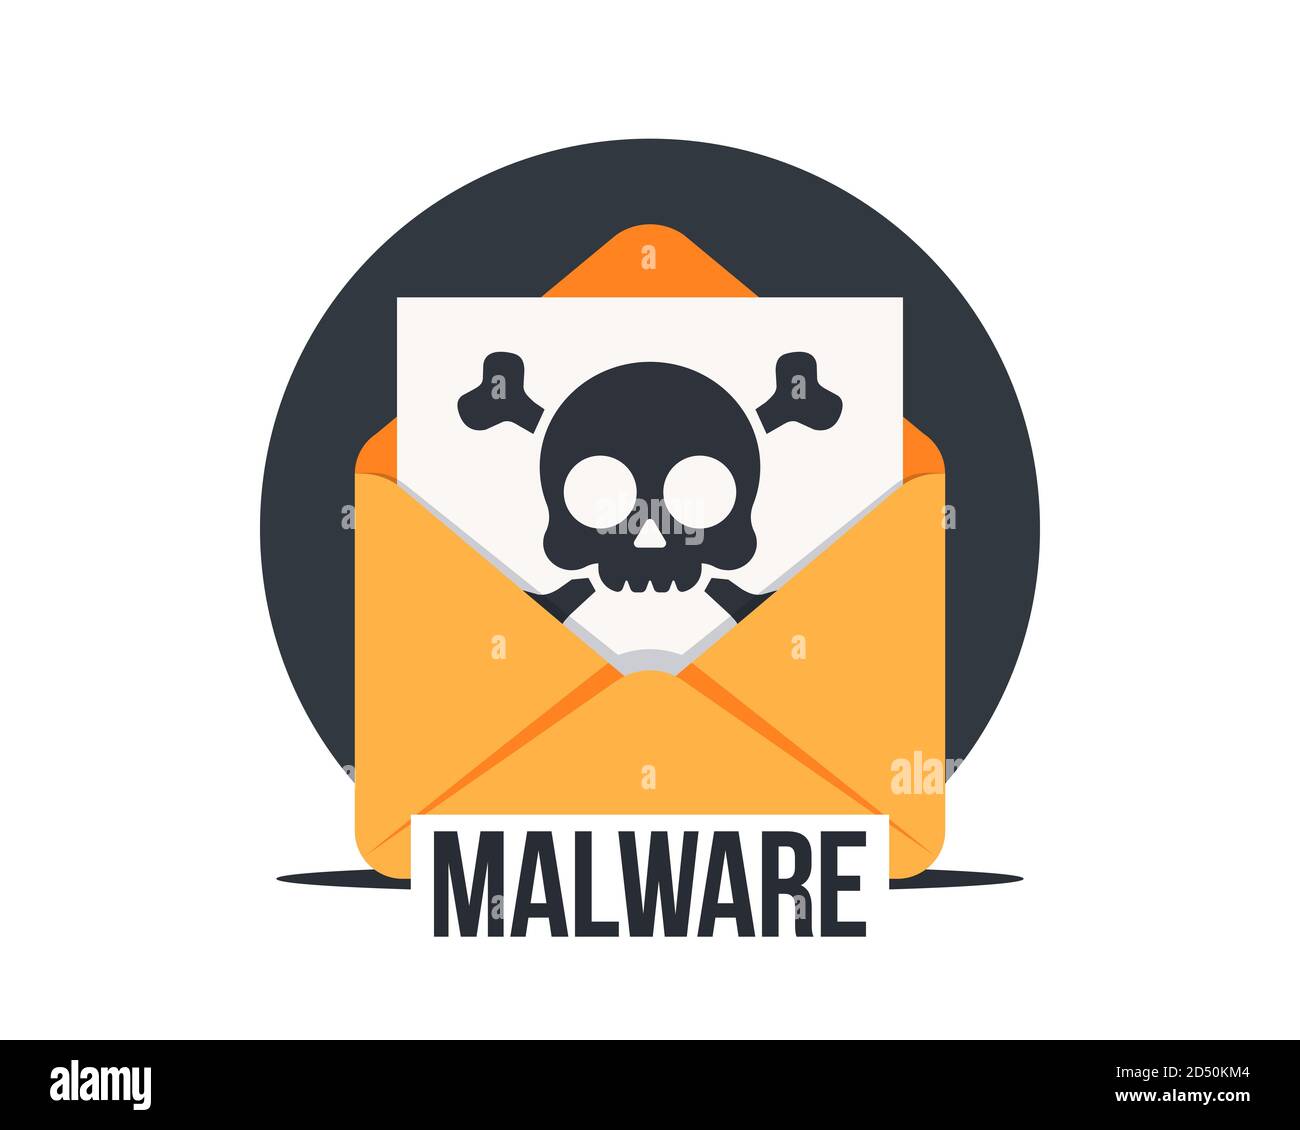 E-Mail mit Malware, Vektorsymbol. Viren, Malware, E-Mail-Betrug, E-Mail-Spam, Phishingbetrug, Hacker-Angriffskonzept. Geöffneter Briefumschlag mit infiziertem FI Stock Vektor